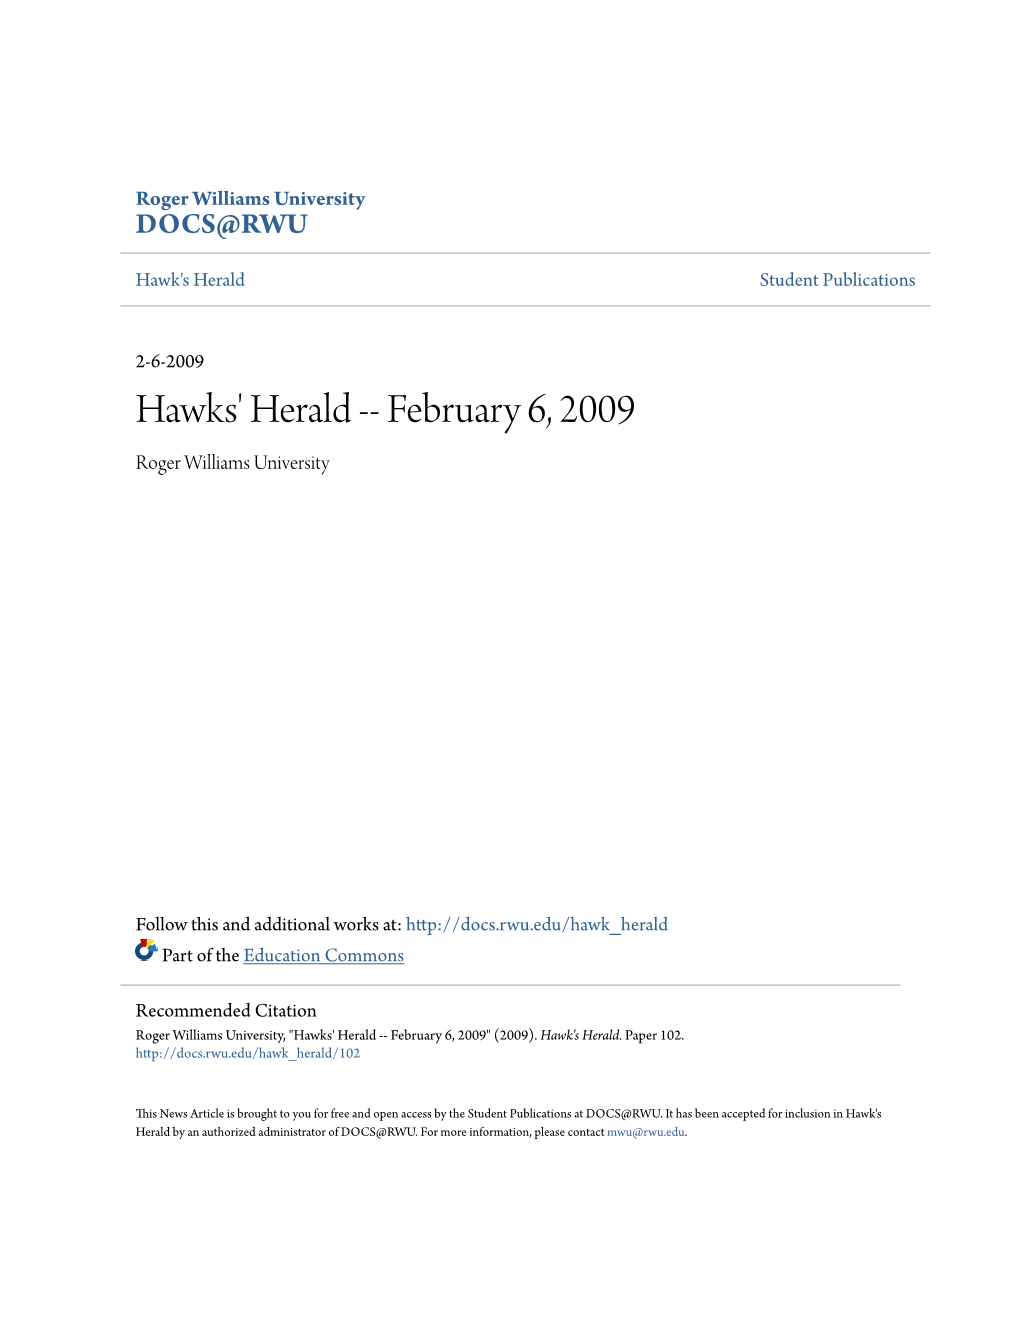 Hawks' Herald -- February 6, 2009 Roger Williams University